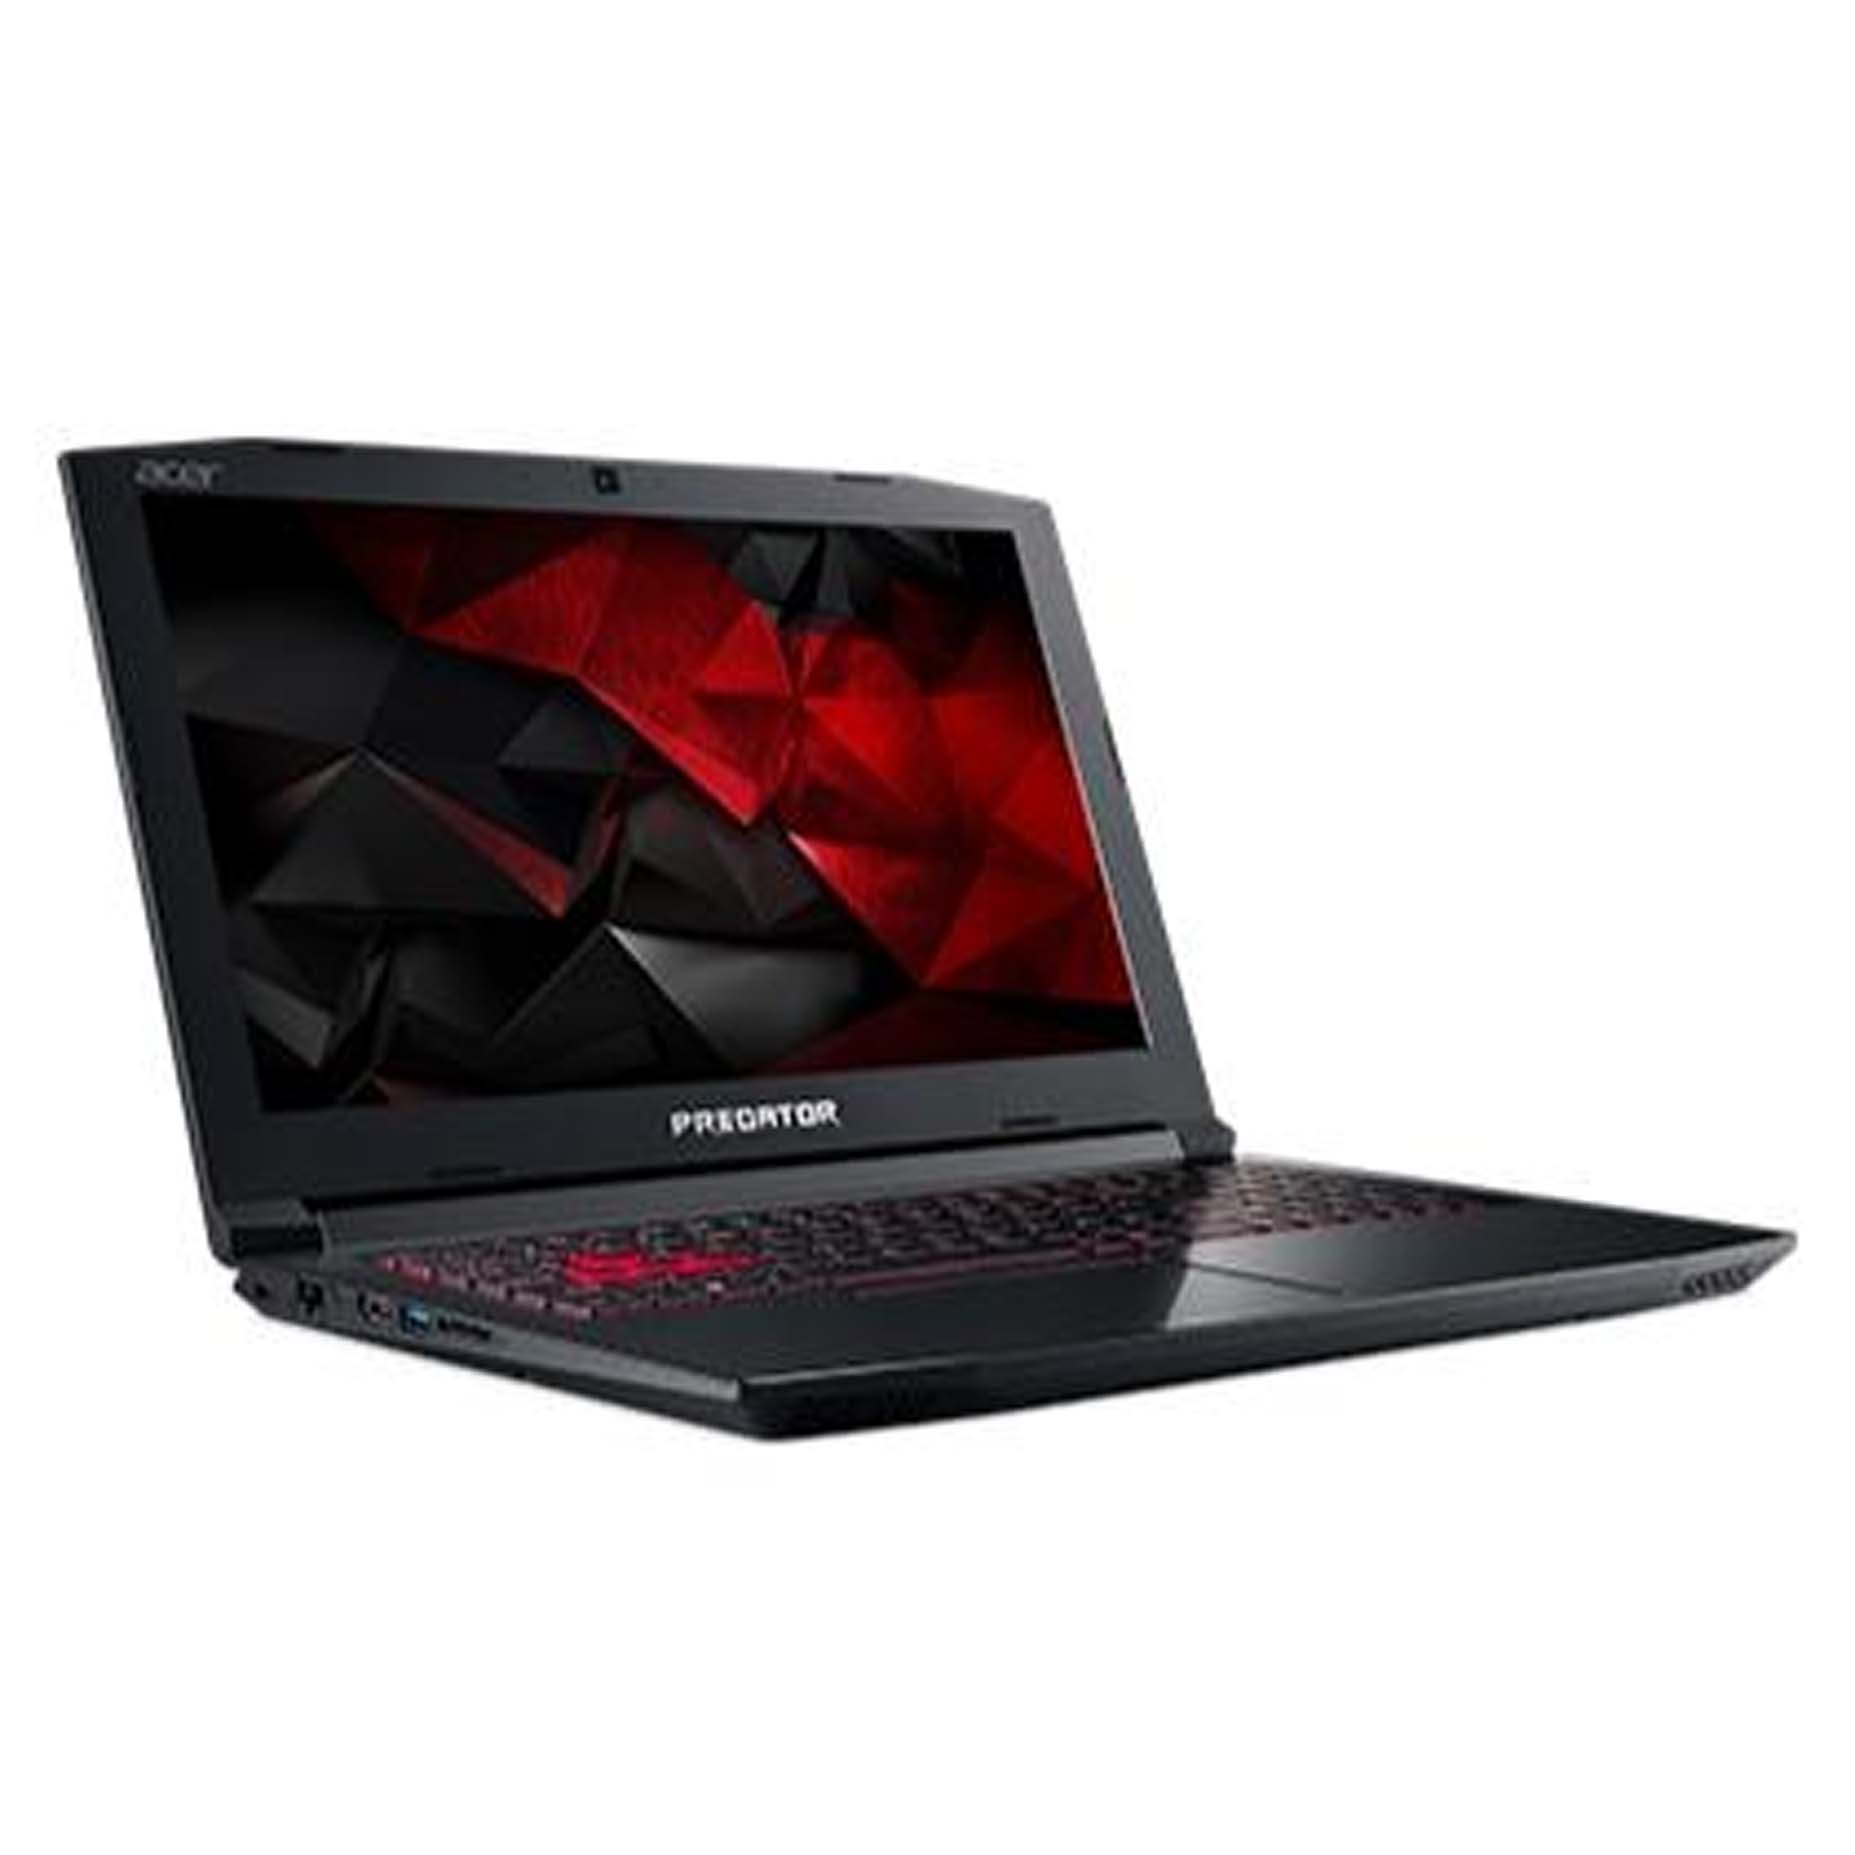 Harga Acer Predator Helios 300 PH315-51 Gaming Laptop i7-8750 16GB 256GB SSD + 1TB HDD 15.6-inch Win 10